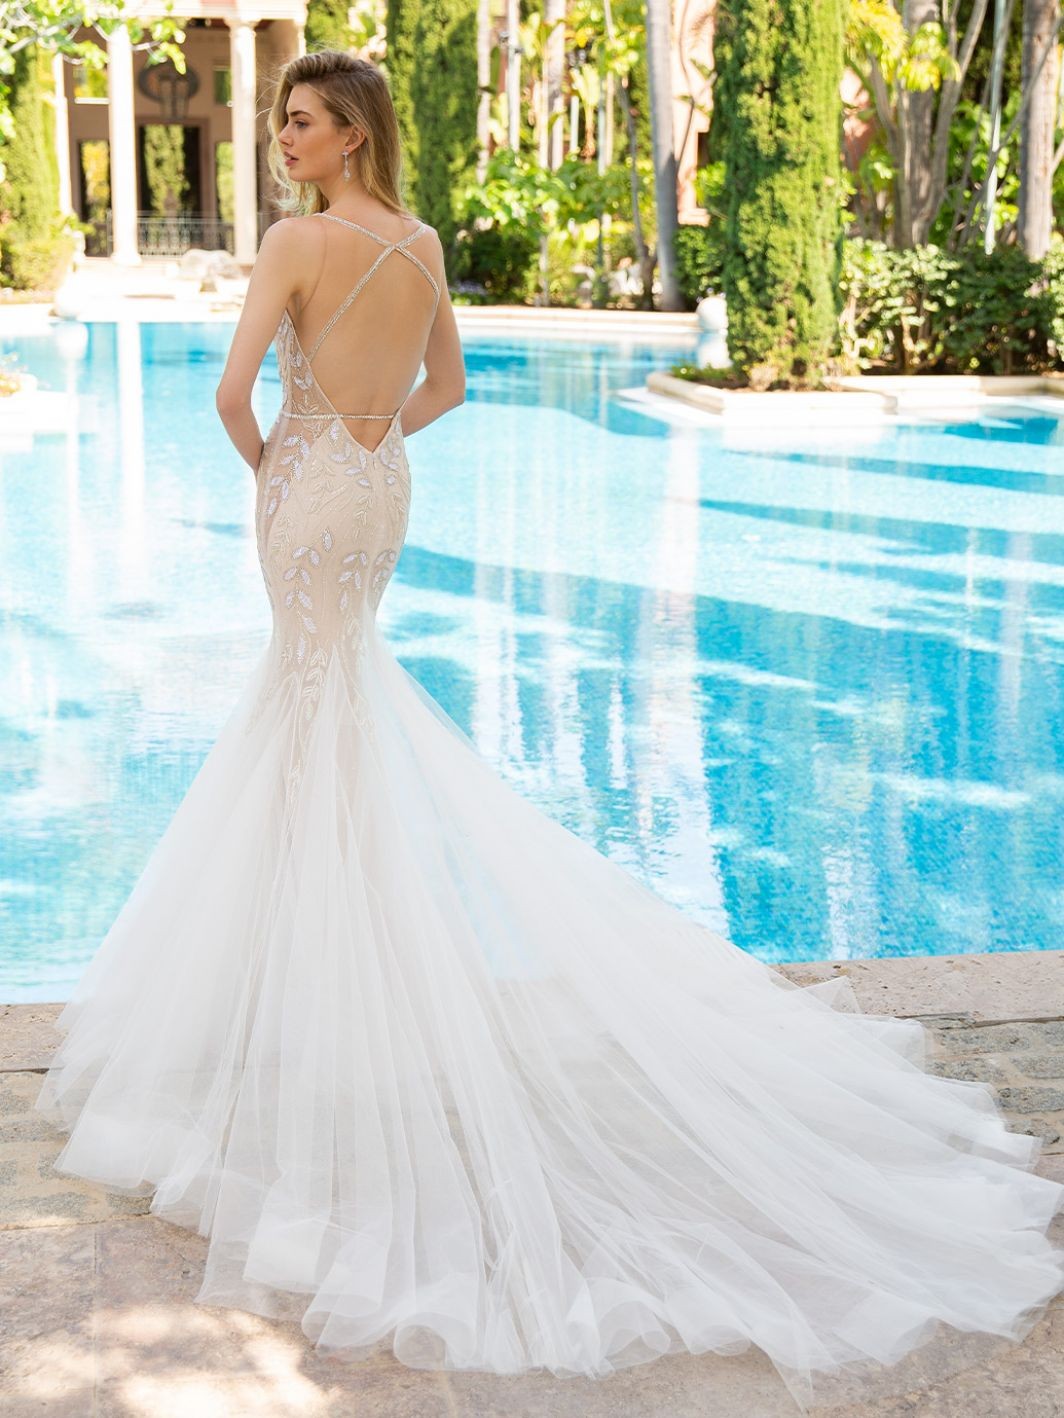 ReaganB Bridal Dress Inspirated By Enzoani 2022